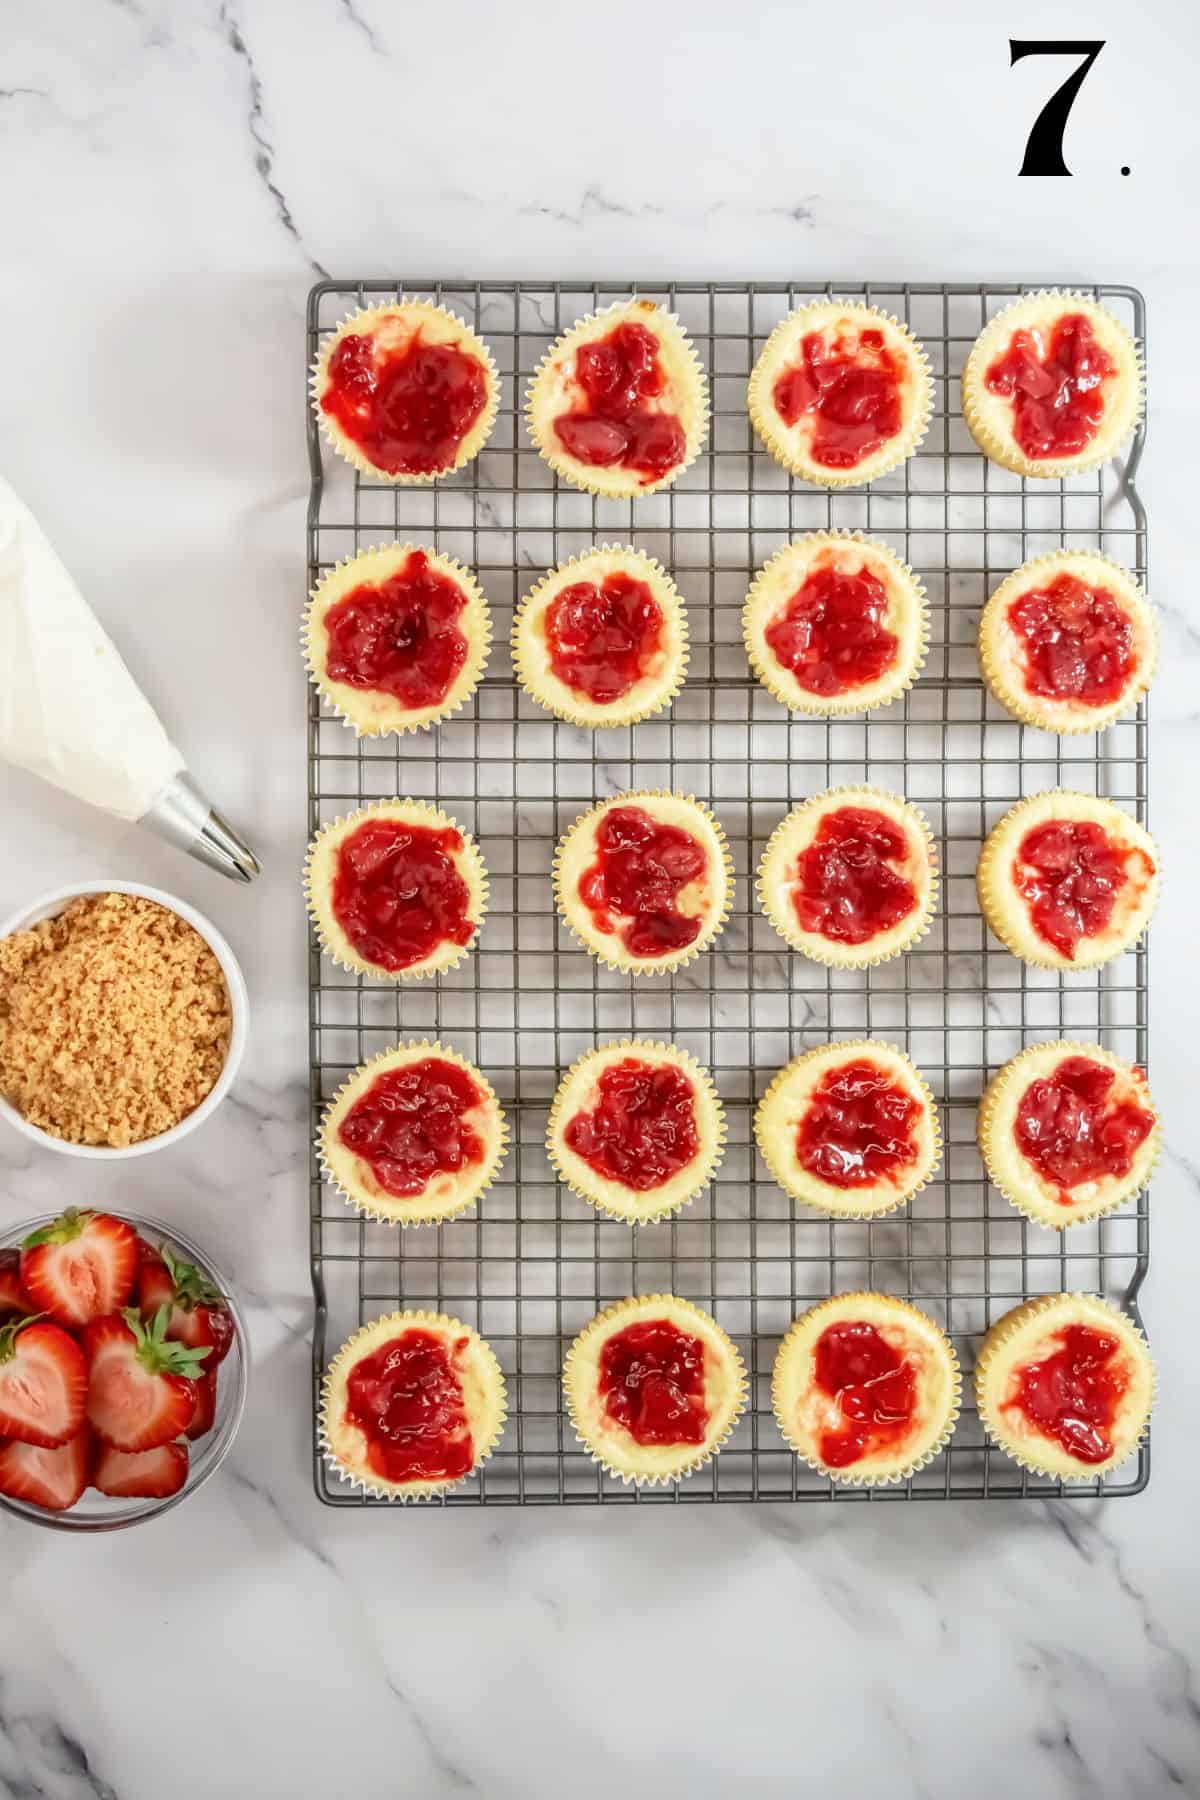 How to Make Strawberry Crunch Mini Cheesecakes - Step 7